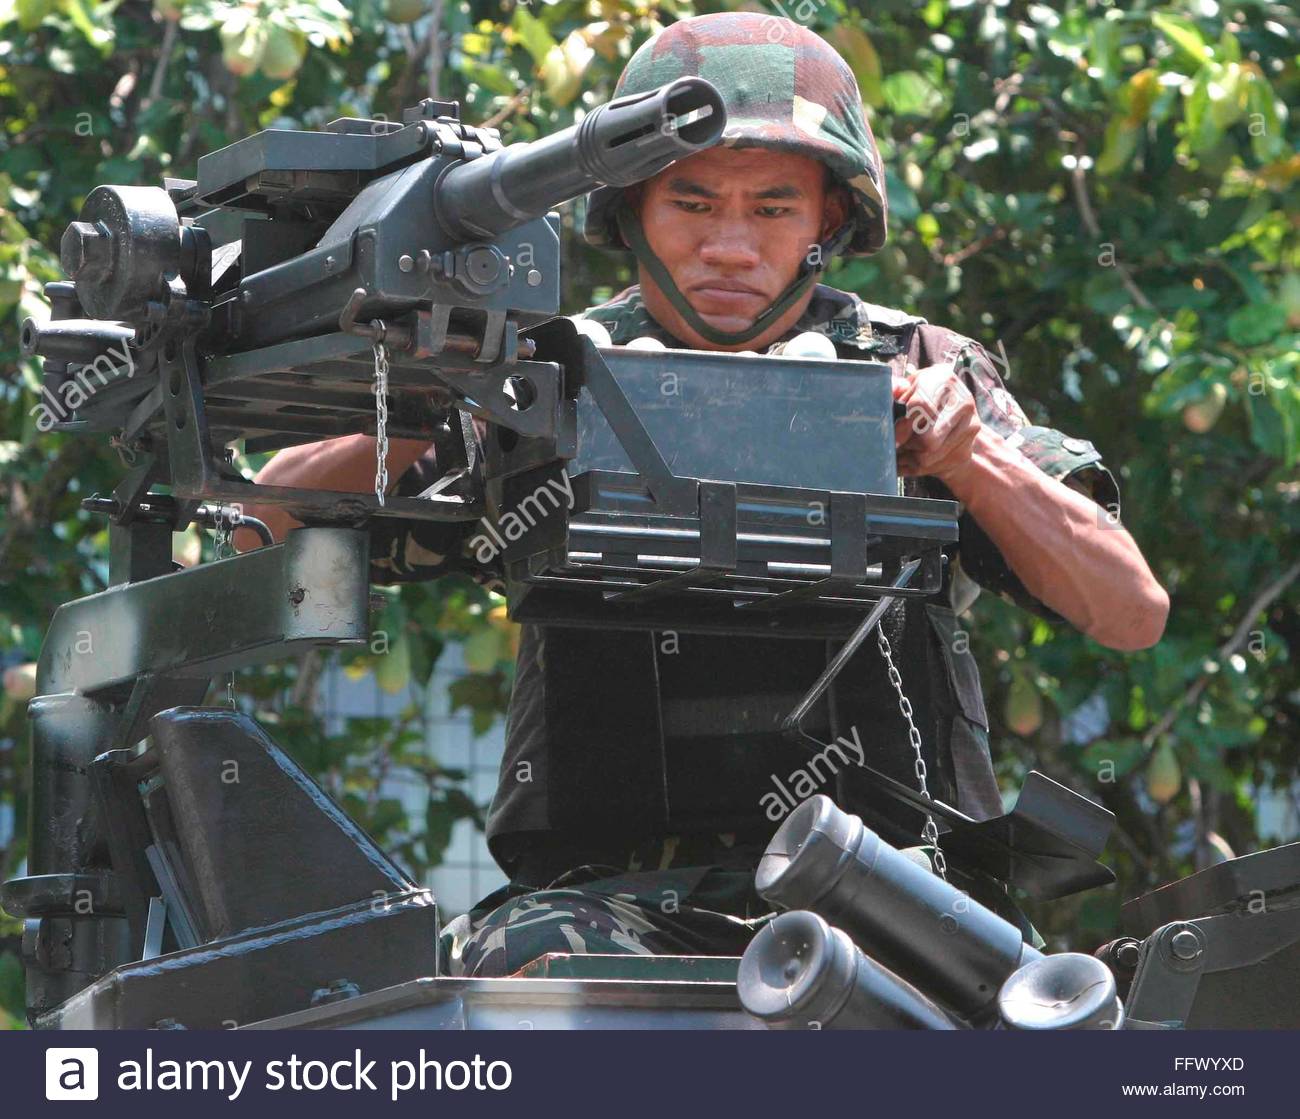 a-filipino-soldier-loads-ammunition-for-a-machine-gun-on-top-of-an-FFWYXD.jpg